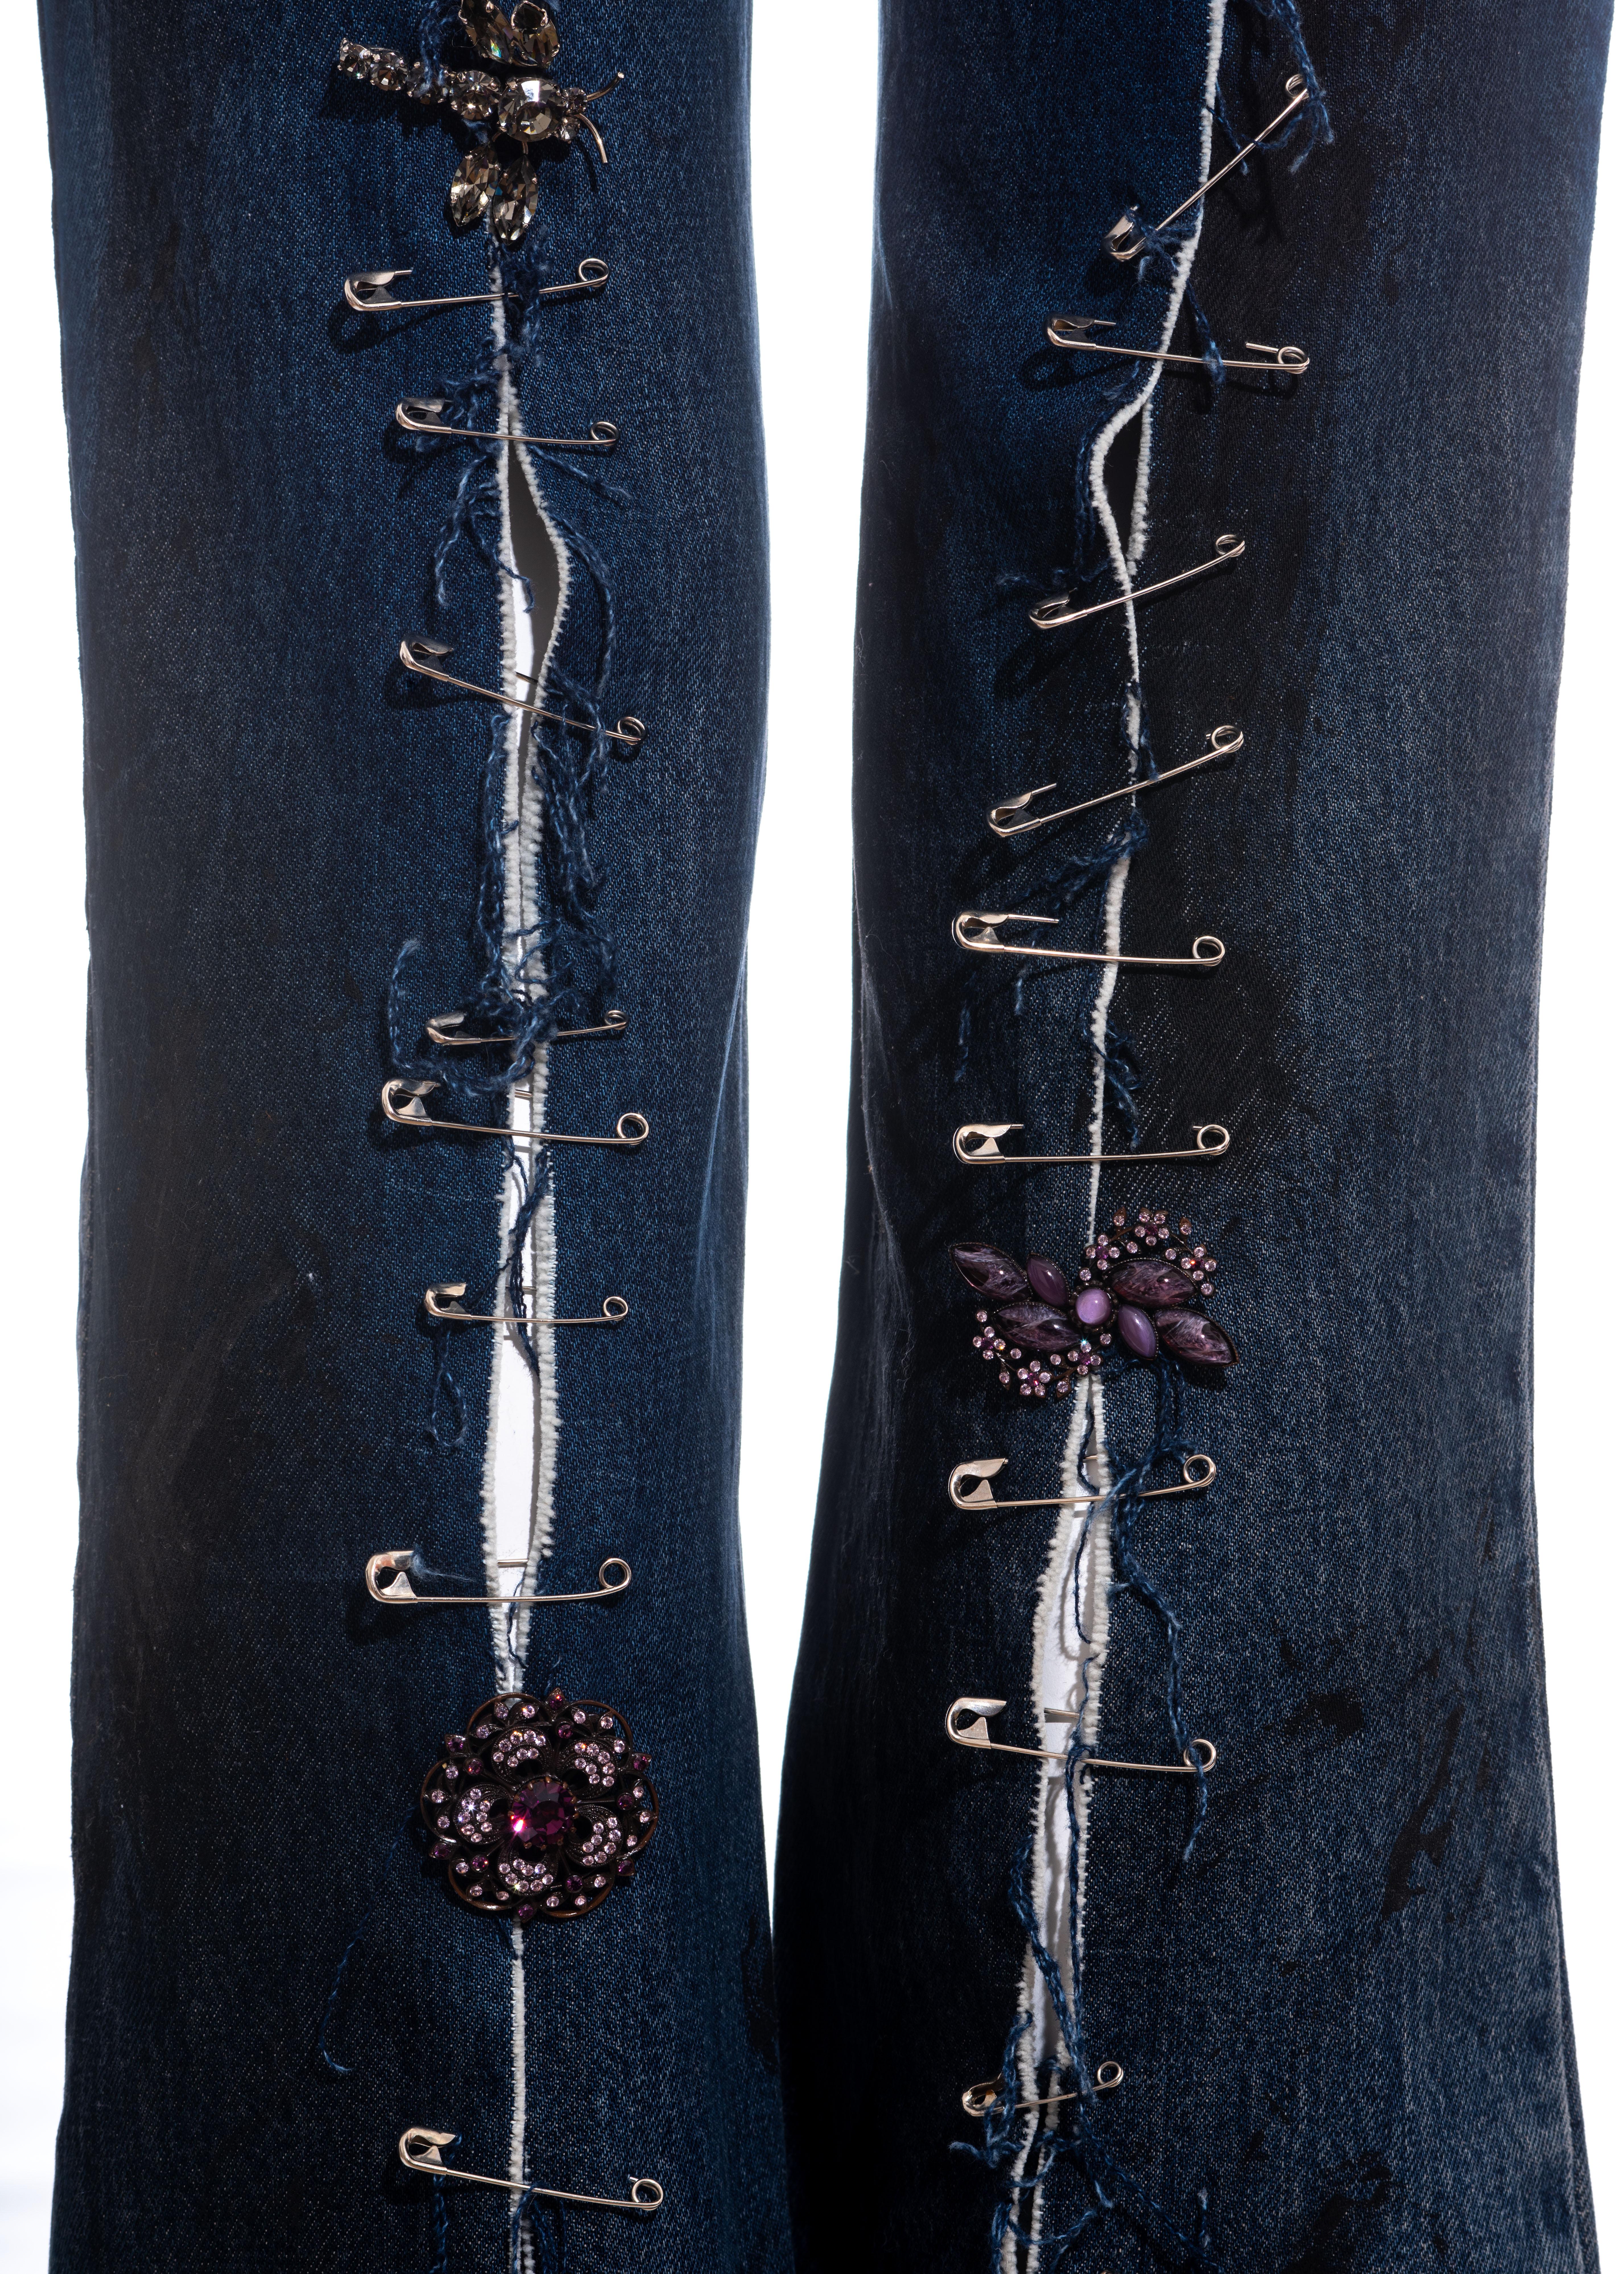 Dolce & Gabbana indigo denim graffiti punk jeans with safety pins, ss 2001 1